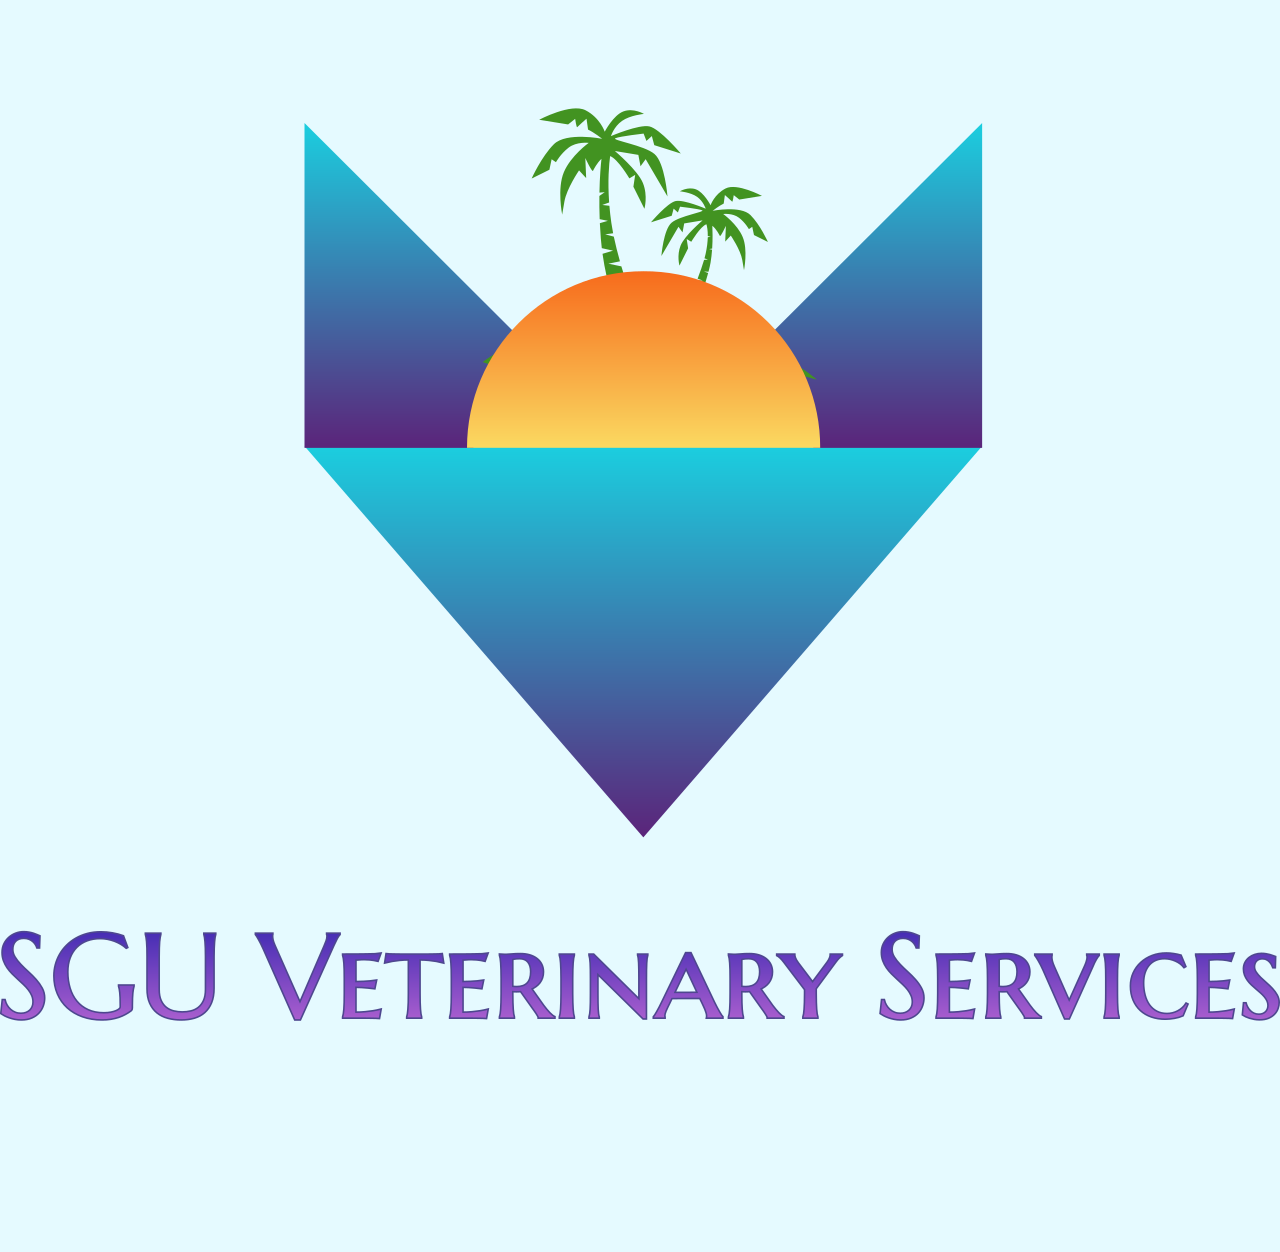 SGU Veterinary Services's web page